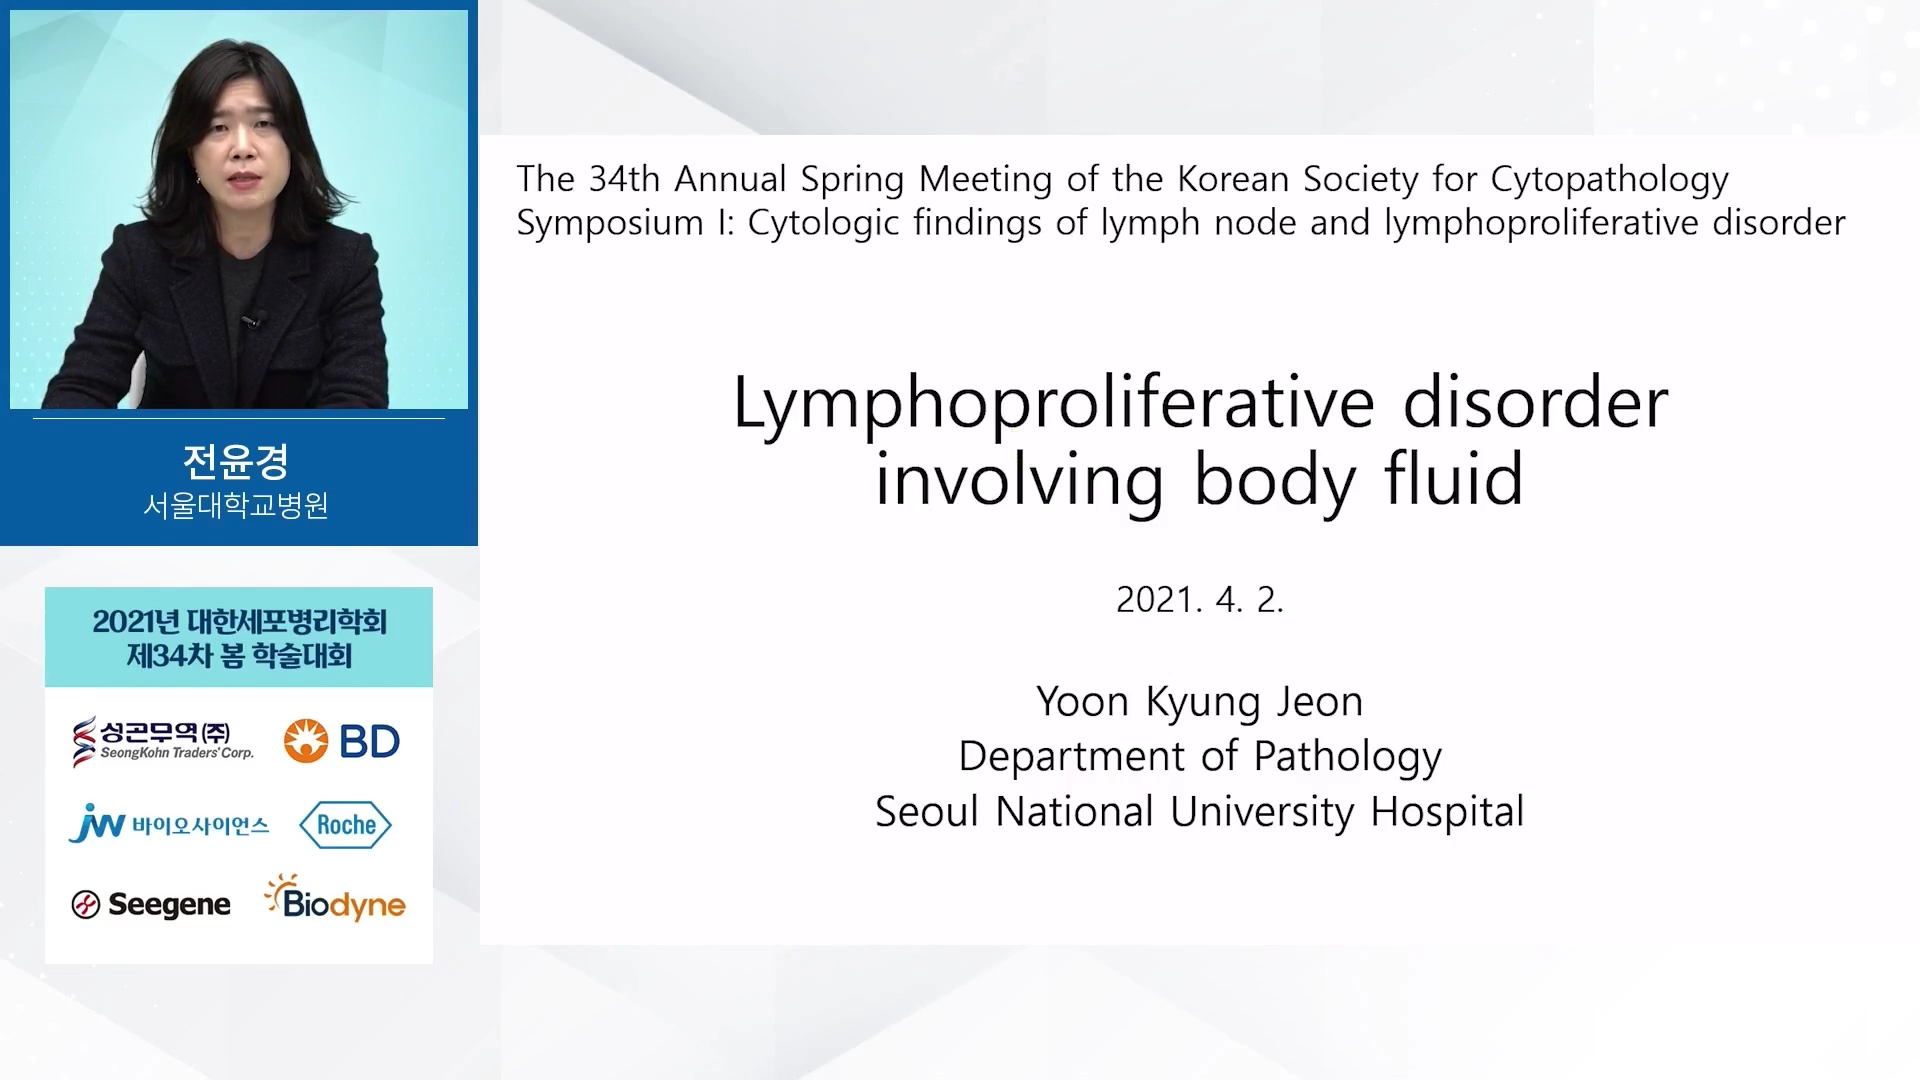 Lymphoproliferative disorder involving body fluid